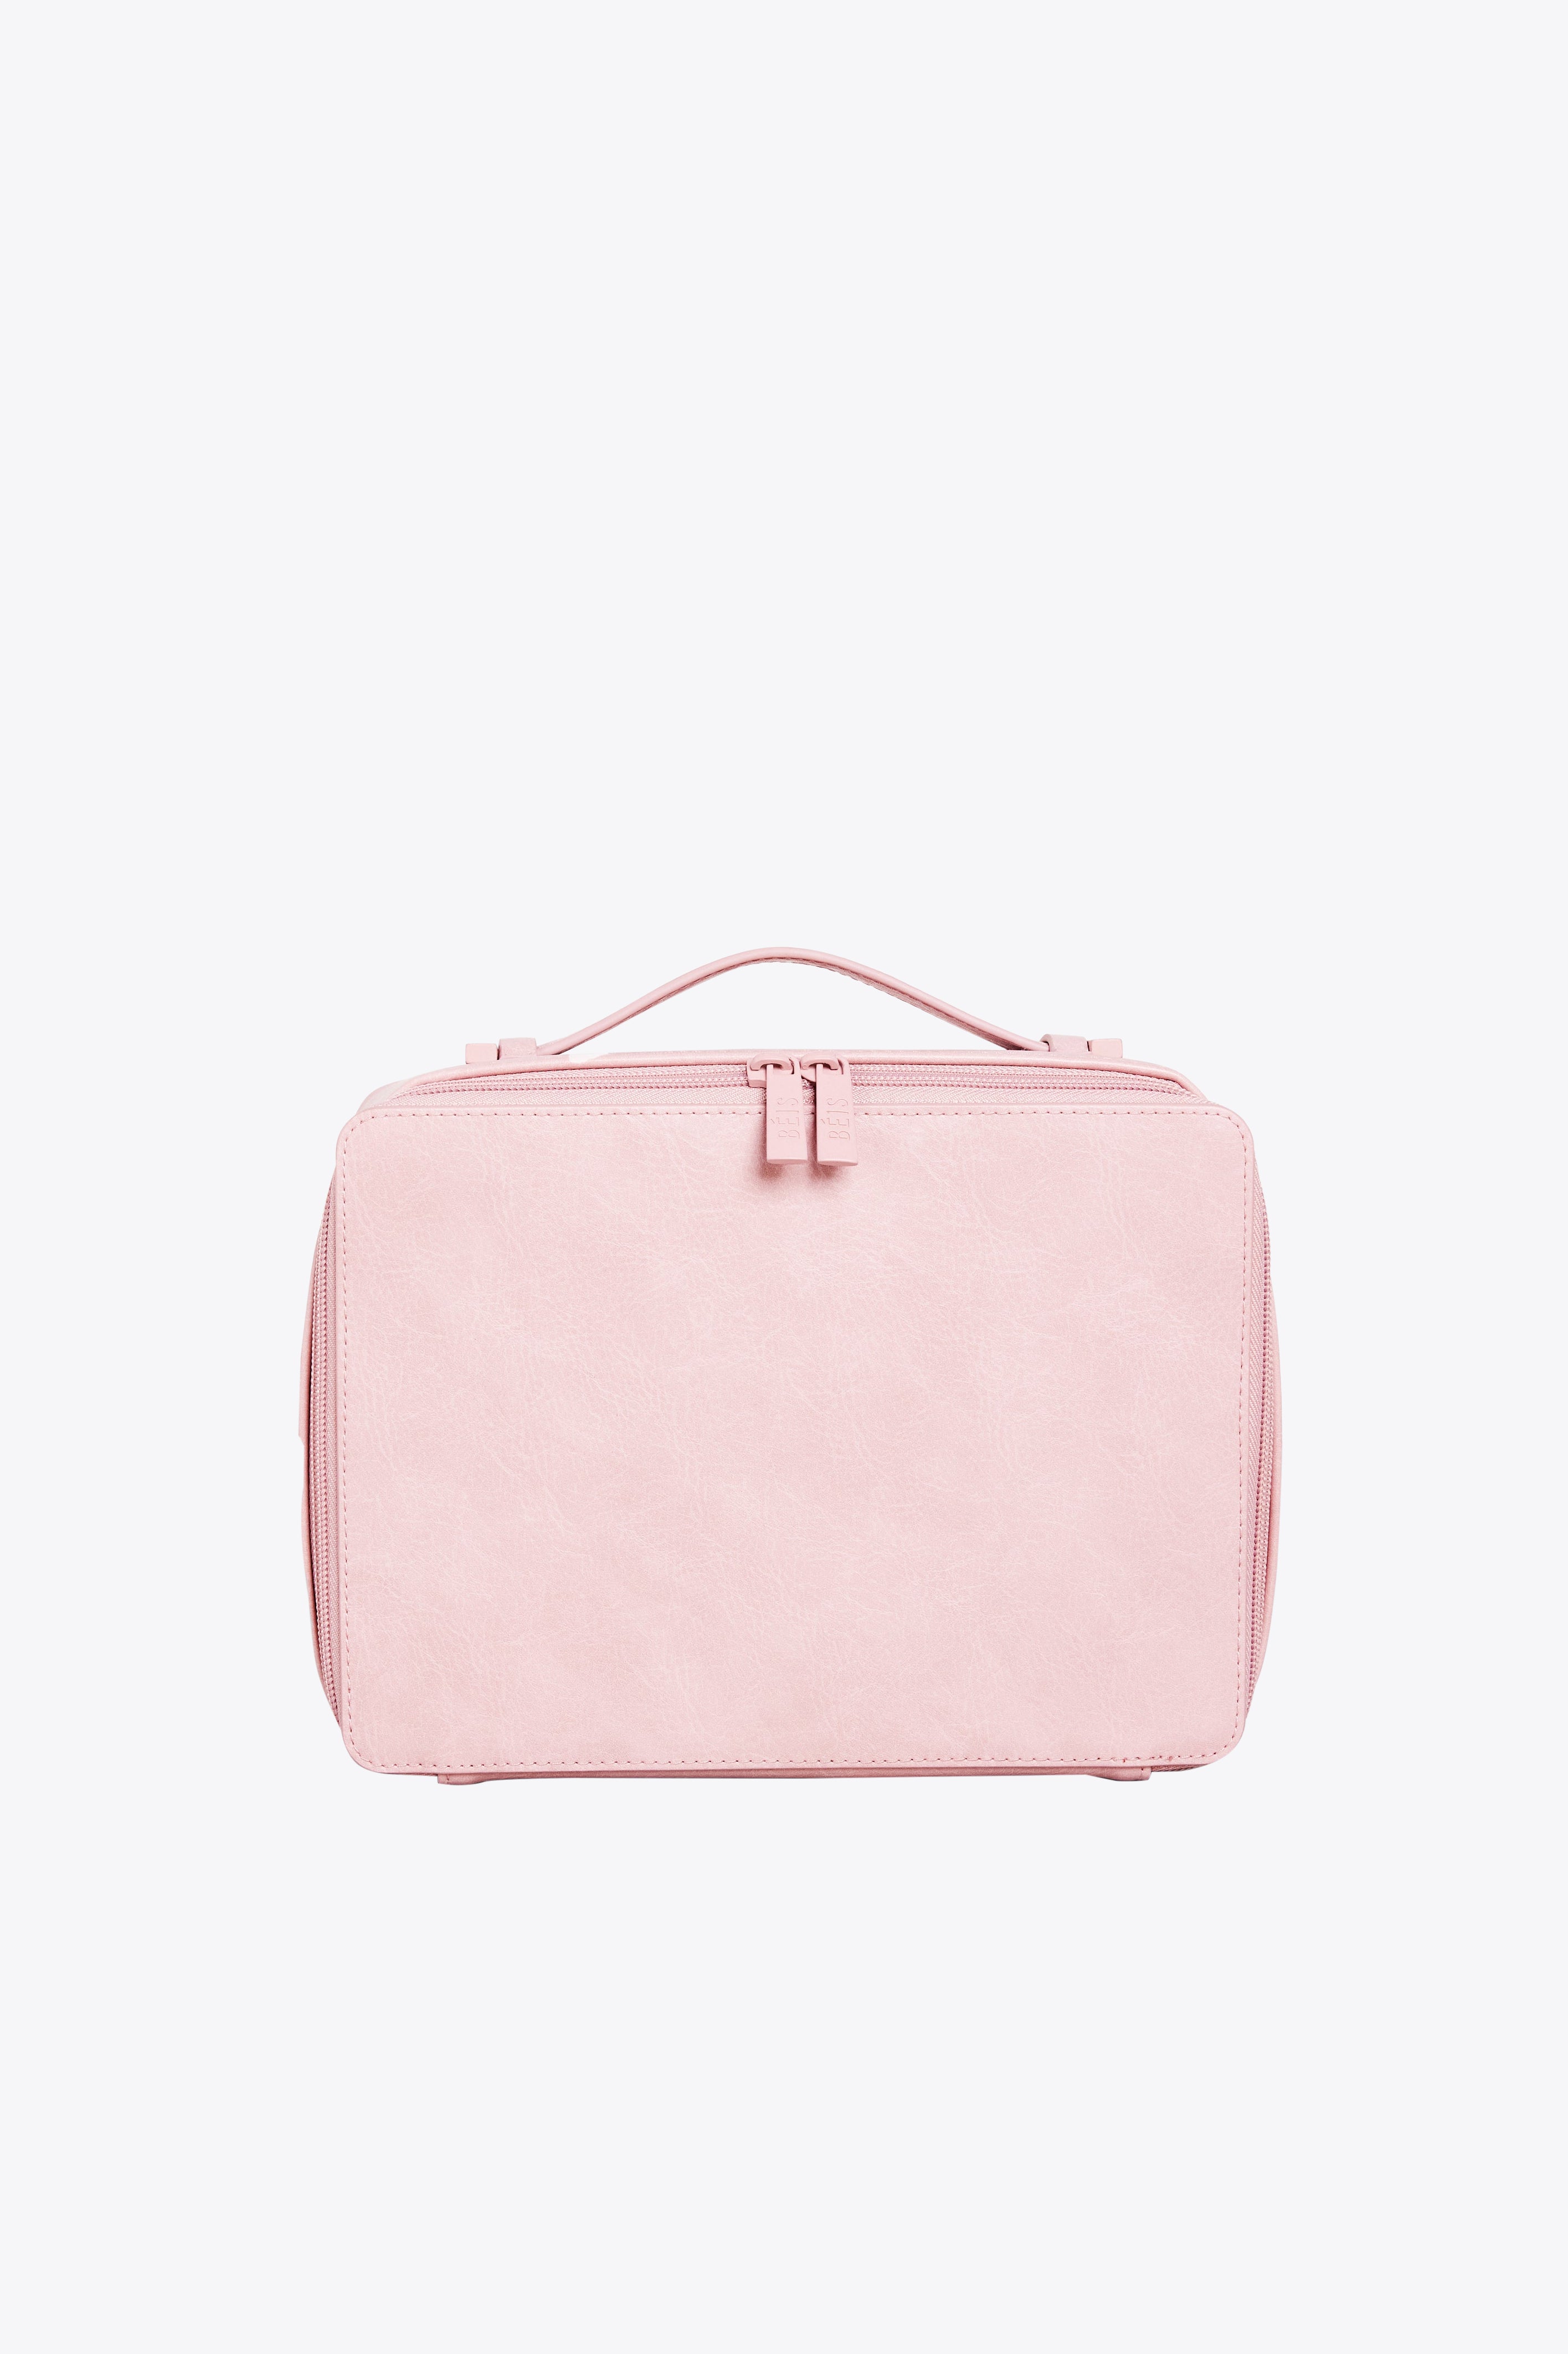 Plaid Traveling Makeup Cosmetic Storage Bag Handbags Wallet Organizer Cute  Pouch